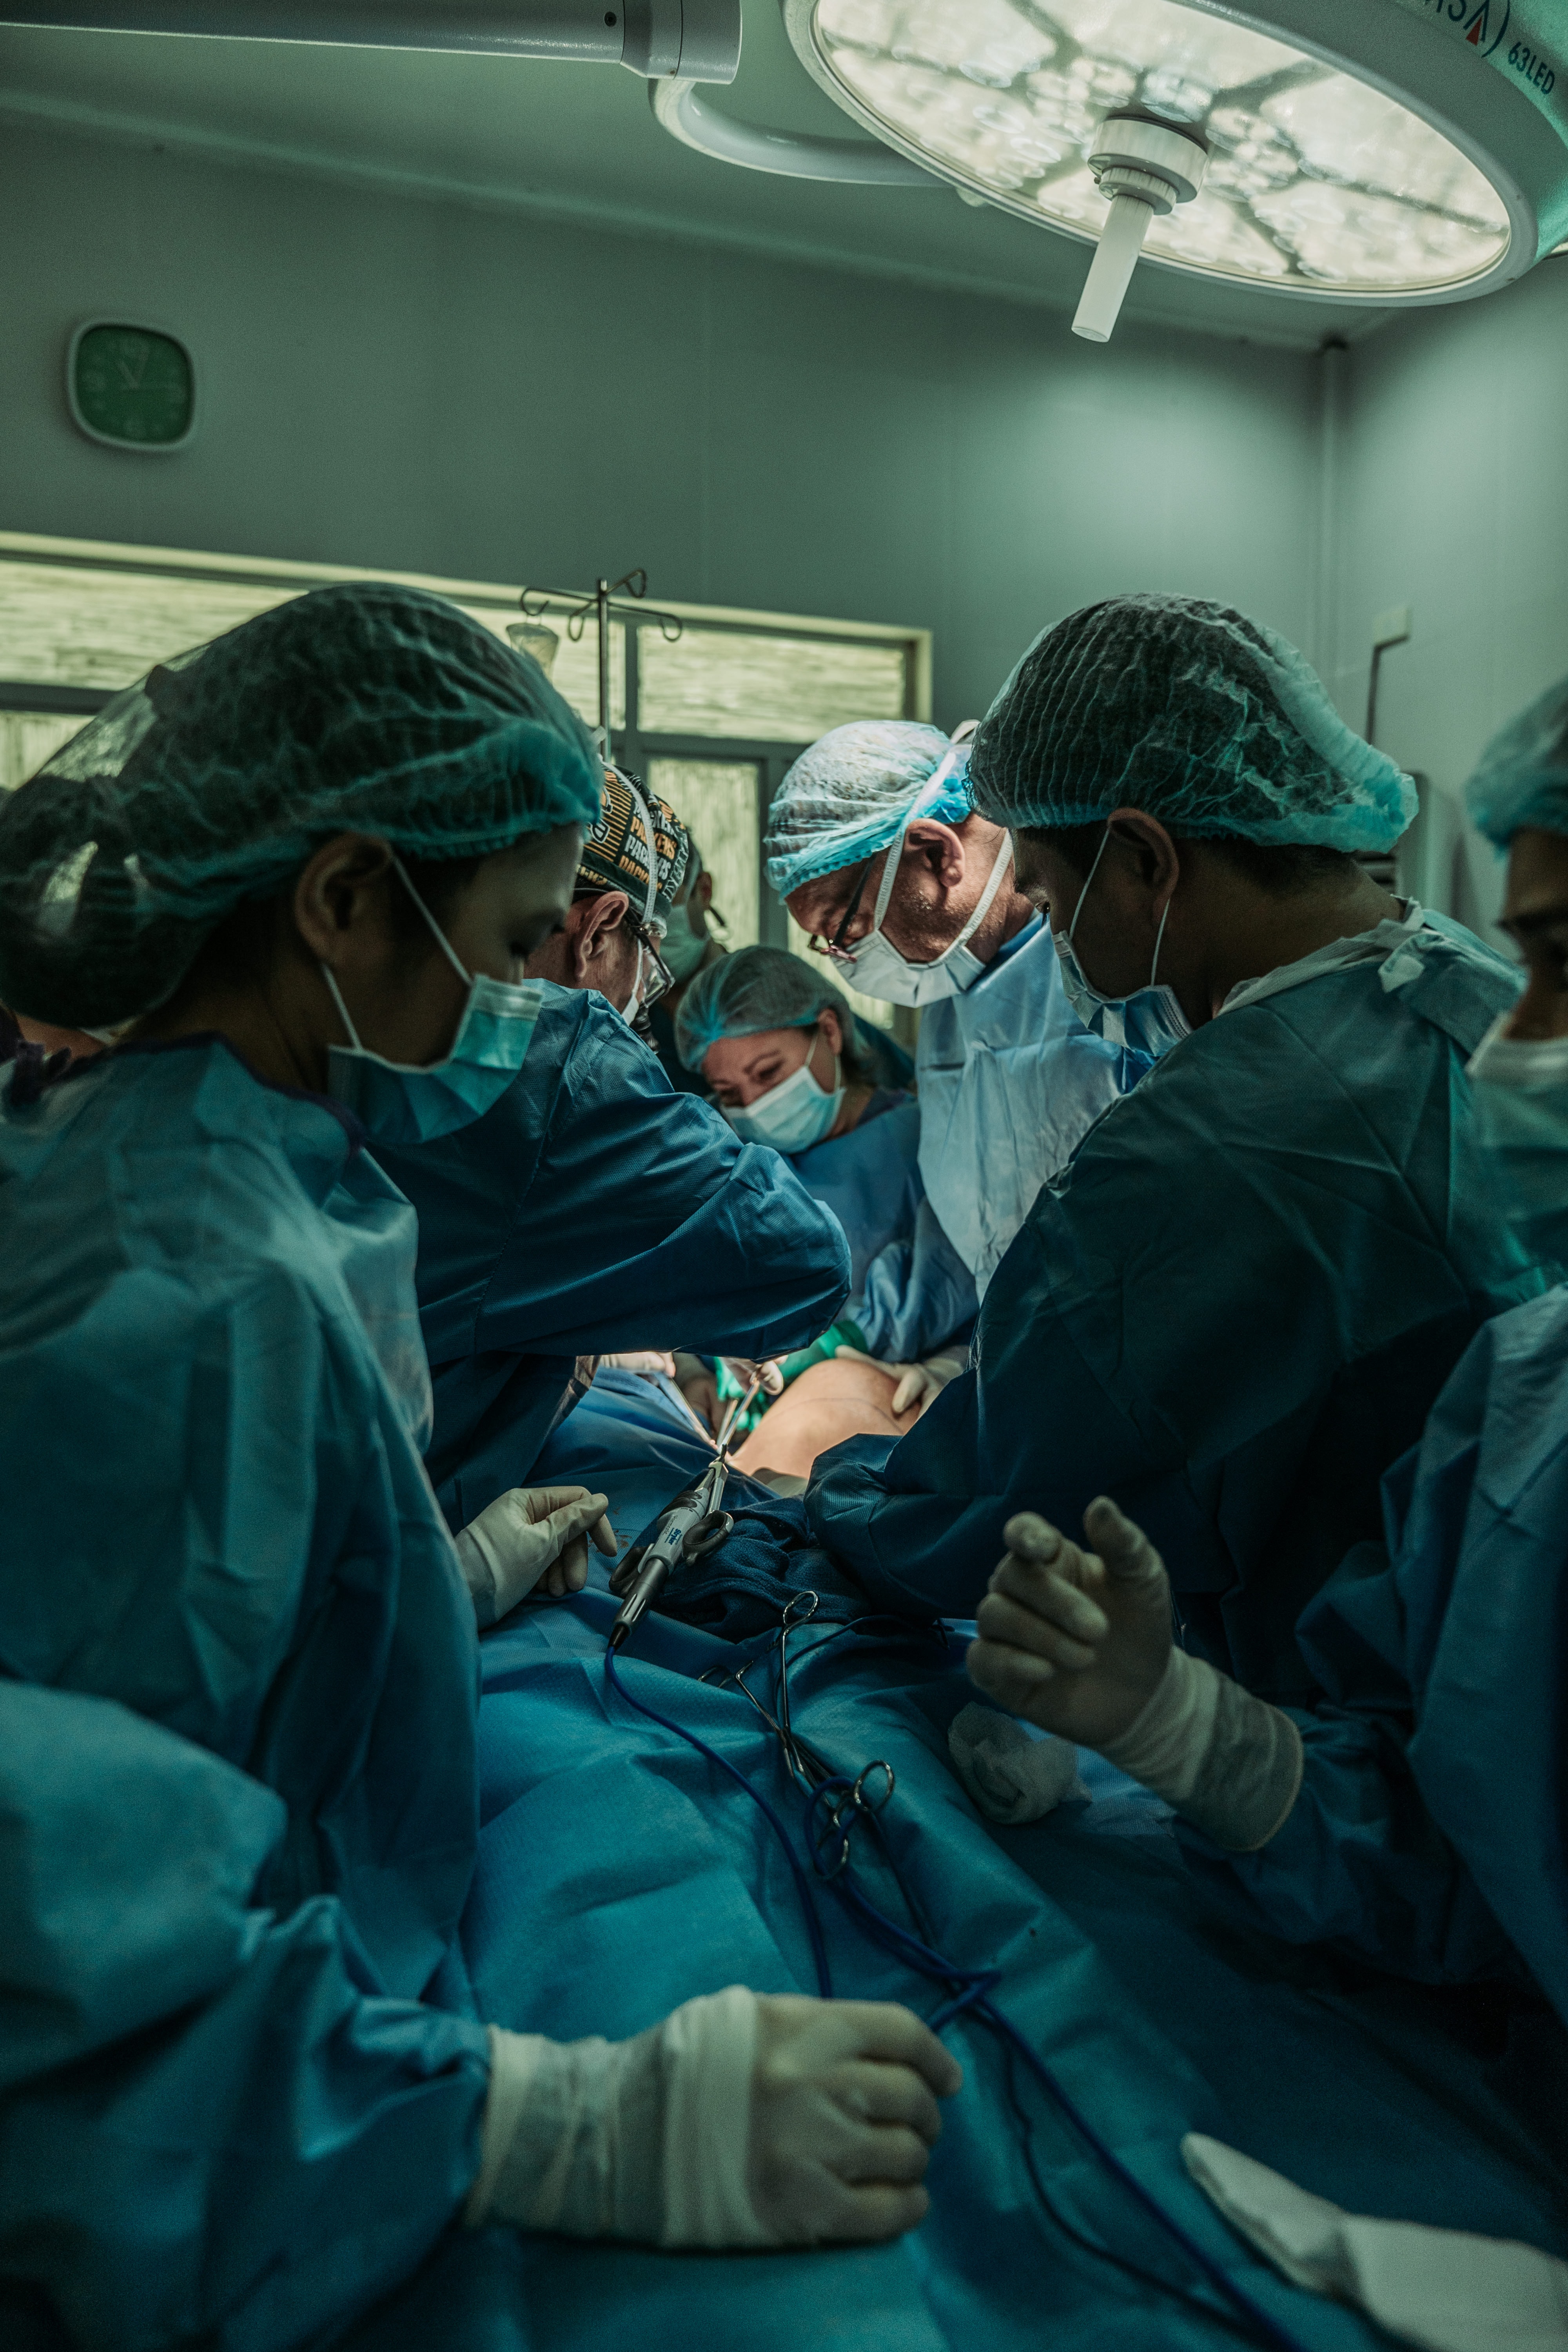 Doctor performing operation; image by JC Gellidon, via Unsplash.com.